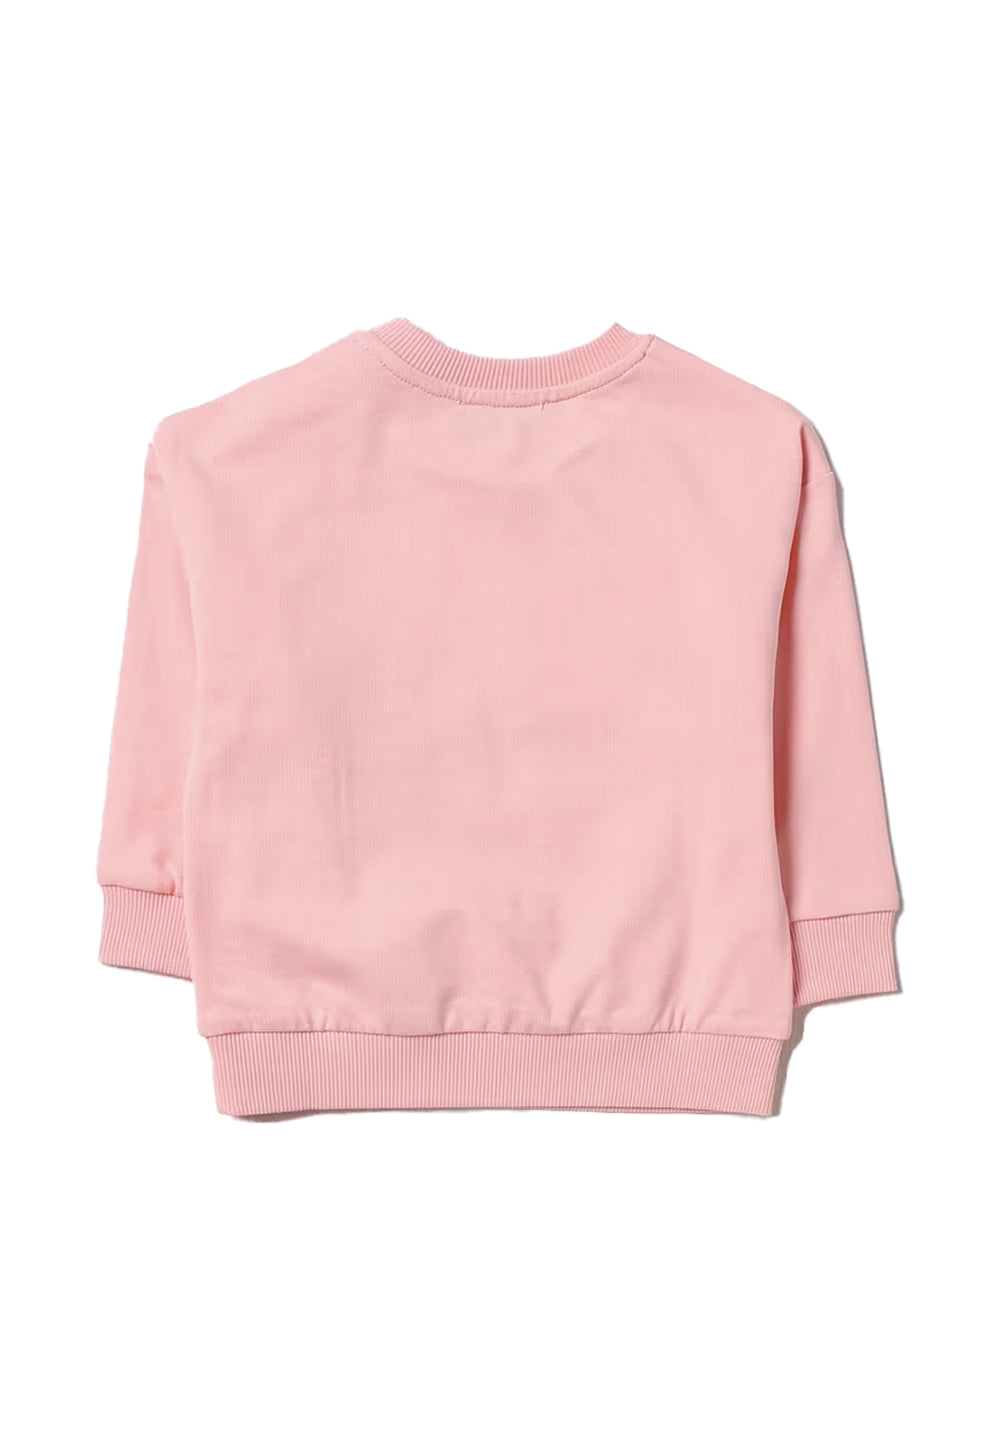 Pink crewneck sweatshirt for baby girls